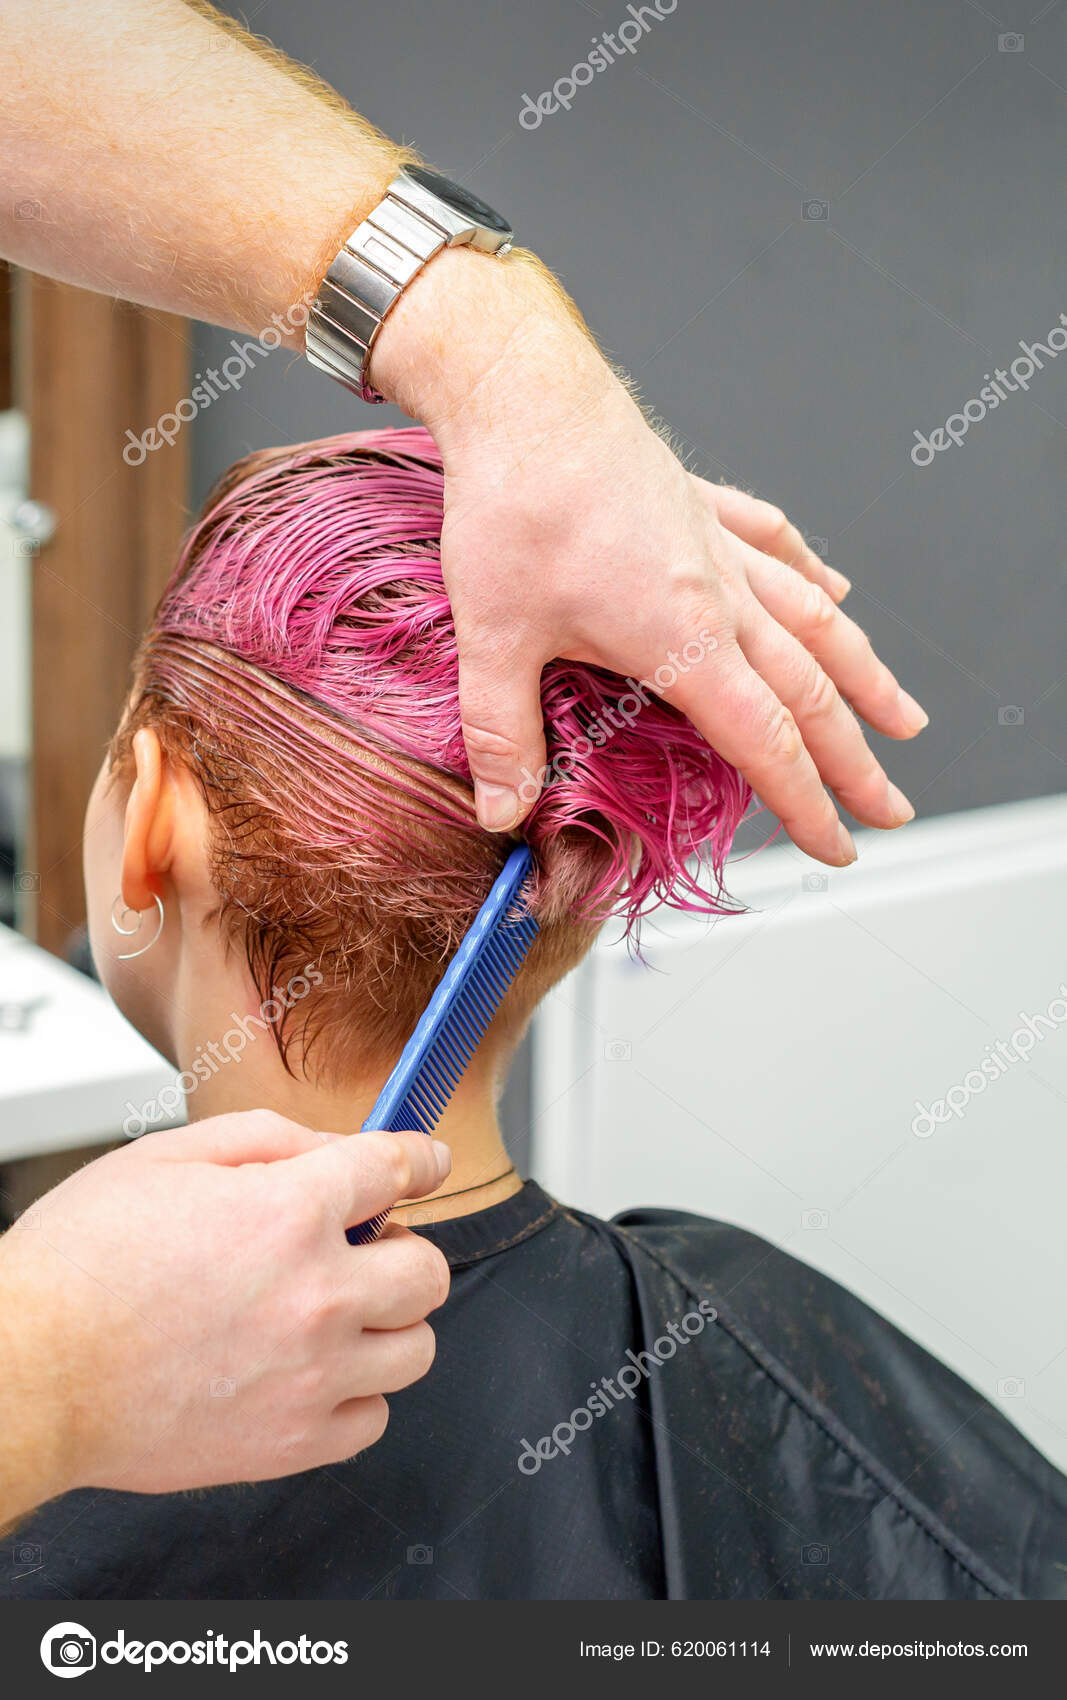 Vista traseira do corte de cabelo do barbeiro feminino, fazendo o